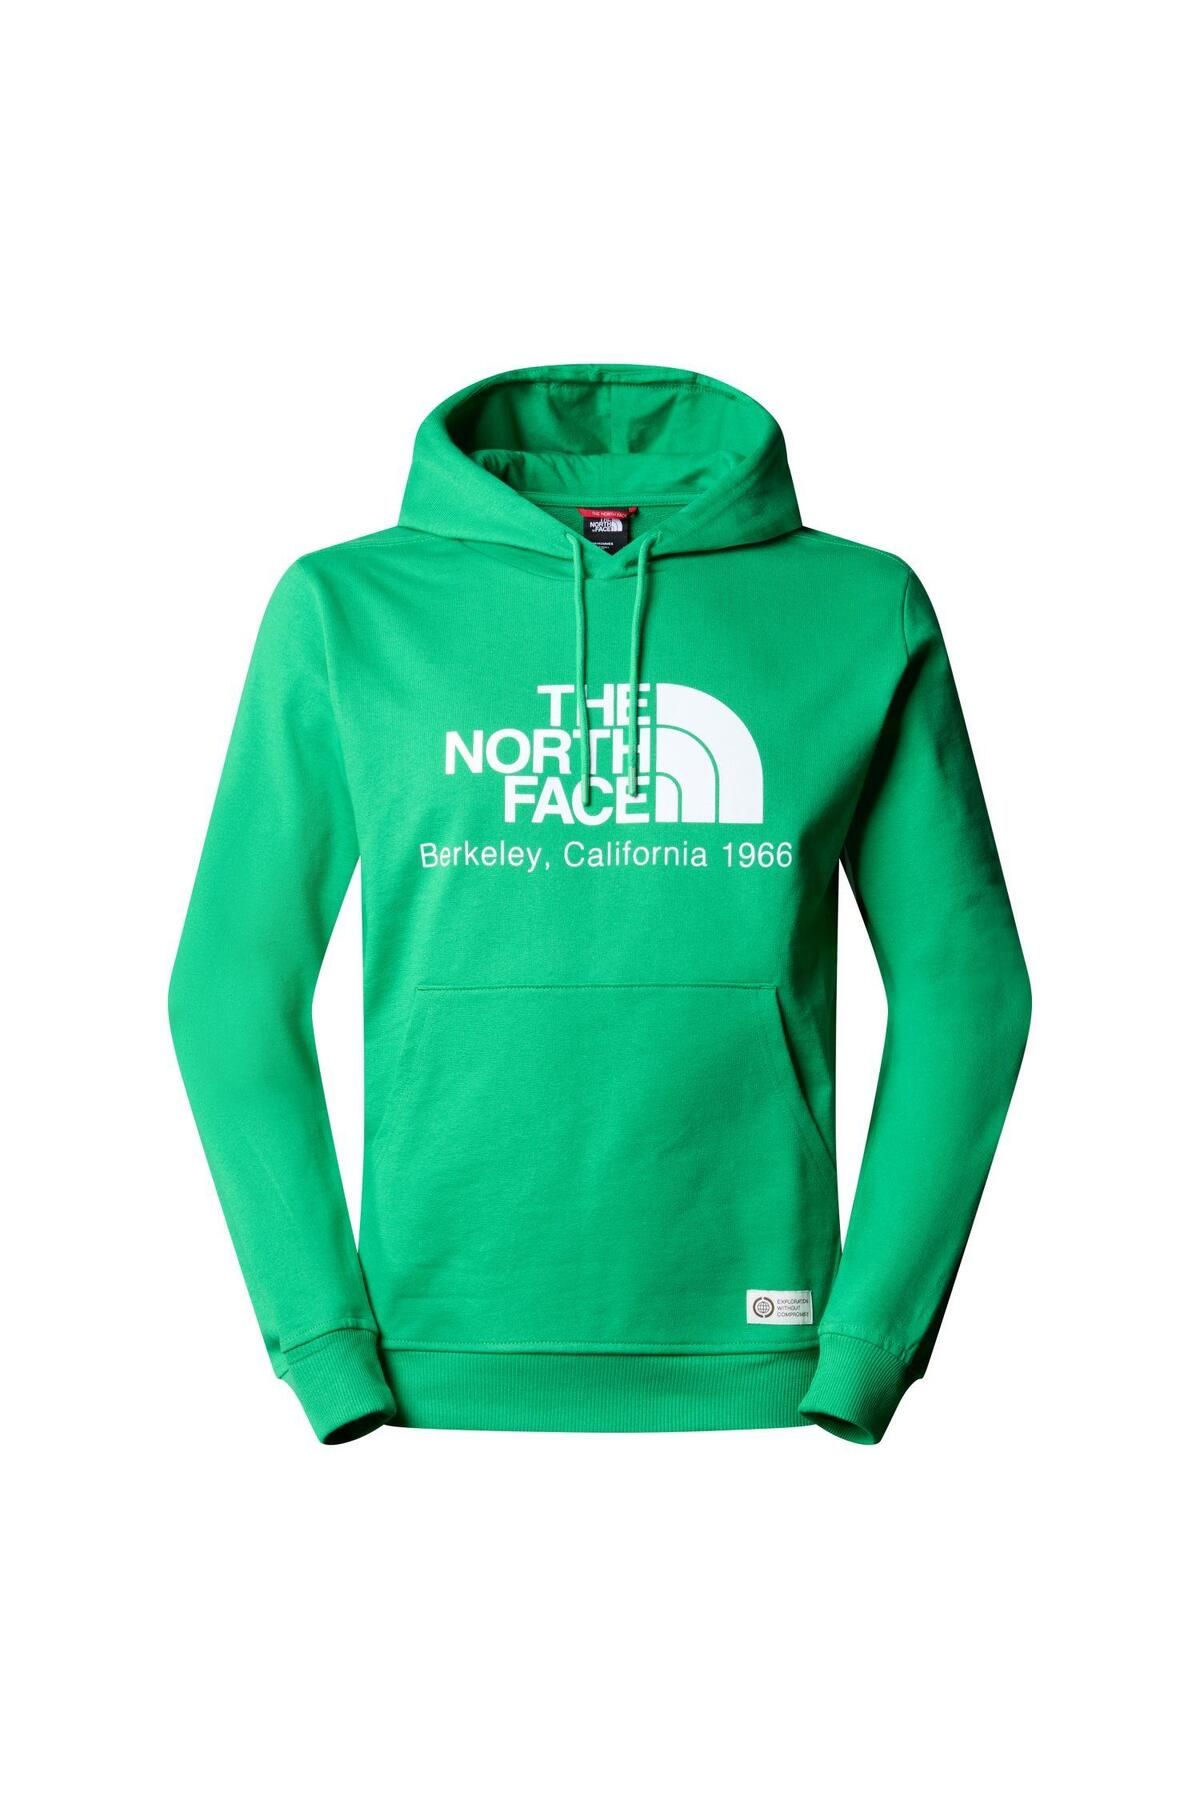 The North Face M BERKELEY CALIFORNIA HOODIE Erkek Sweat Shirt NF0A55GFPO81 Yeşil-XL